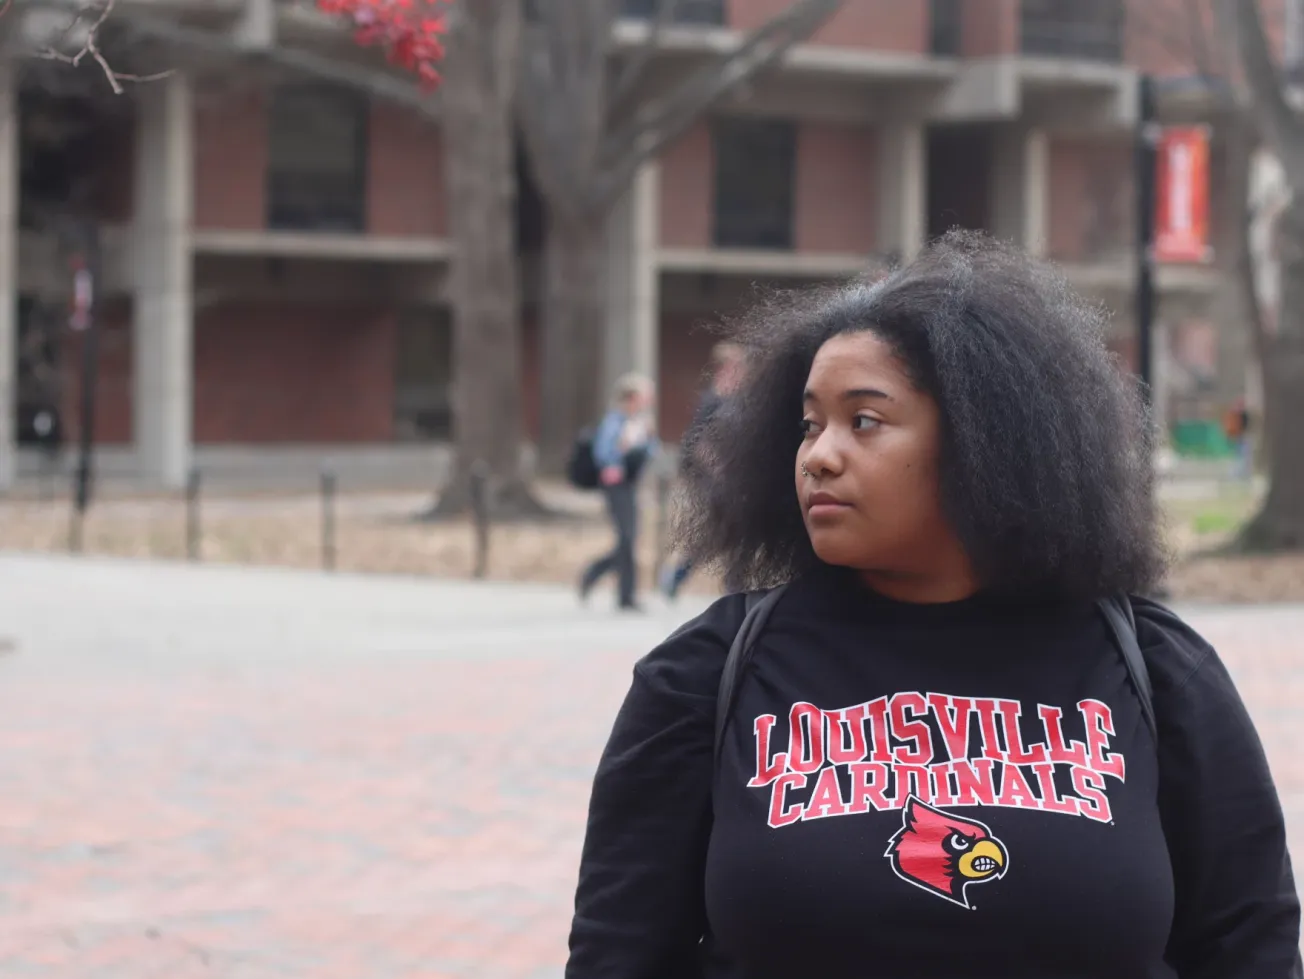 Black student's statement on anti-DEI legislation misrepresented to Kentucky lawmakers, she says